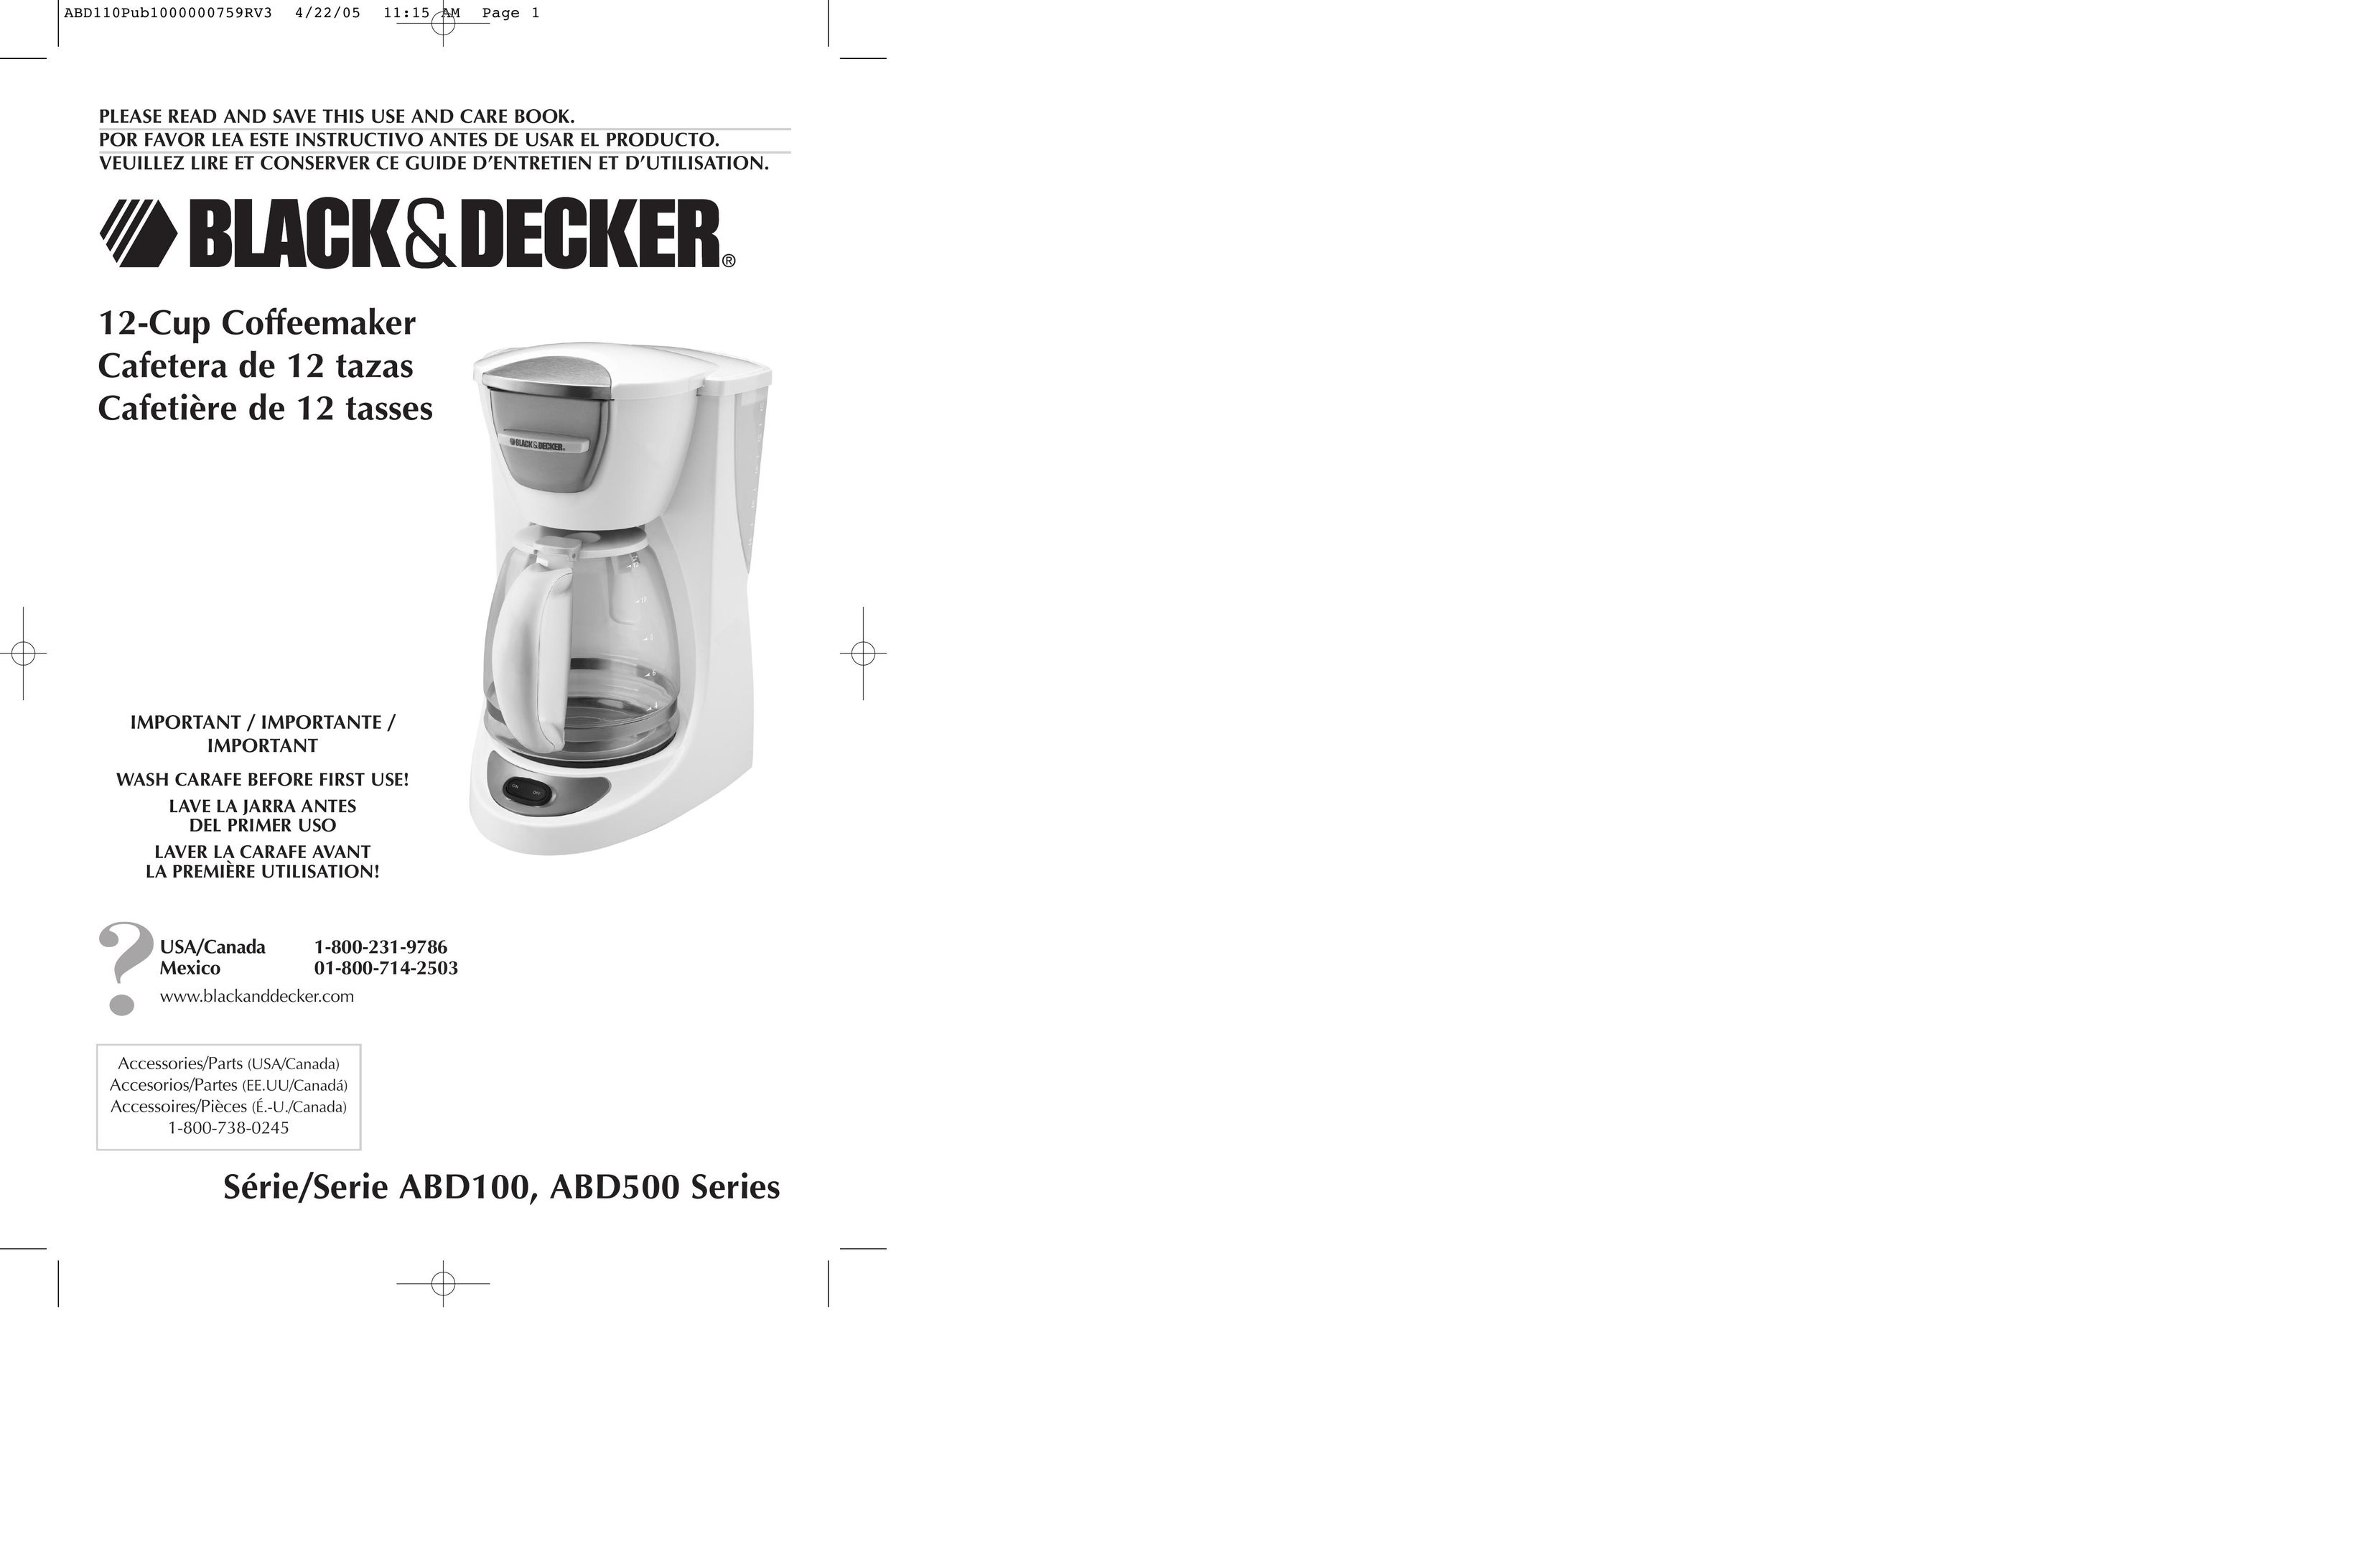 Black & Decker ABD100 Coffeemaker User Manual